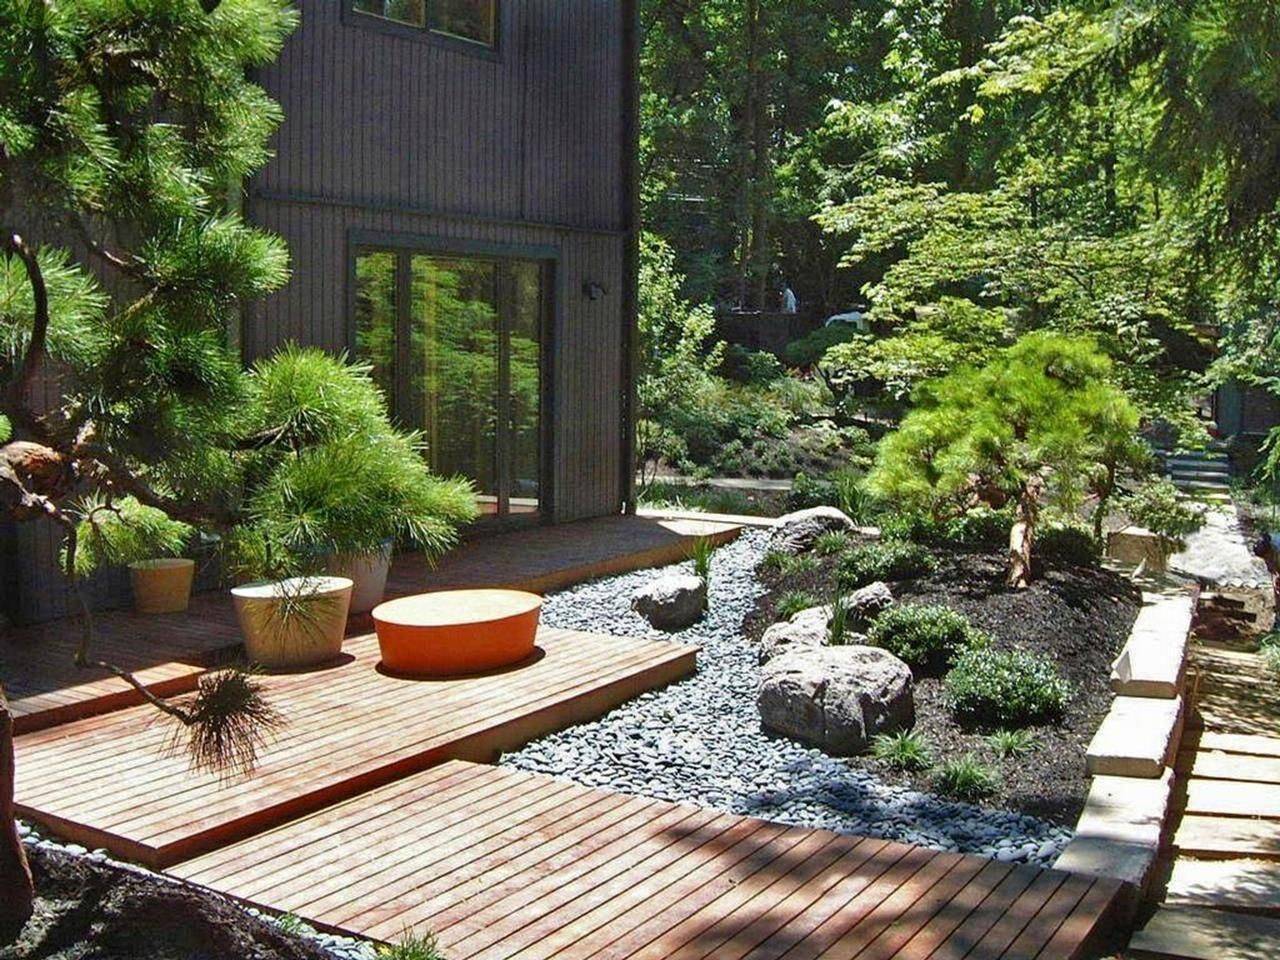 Peacefully Japanese Zen Garden Gallery Inspirations